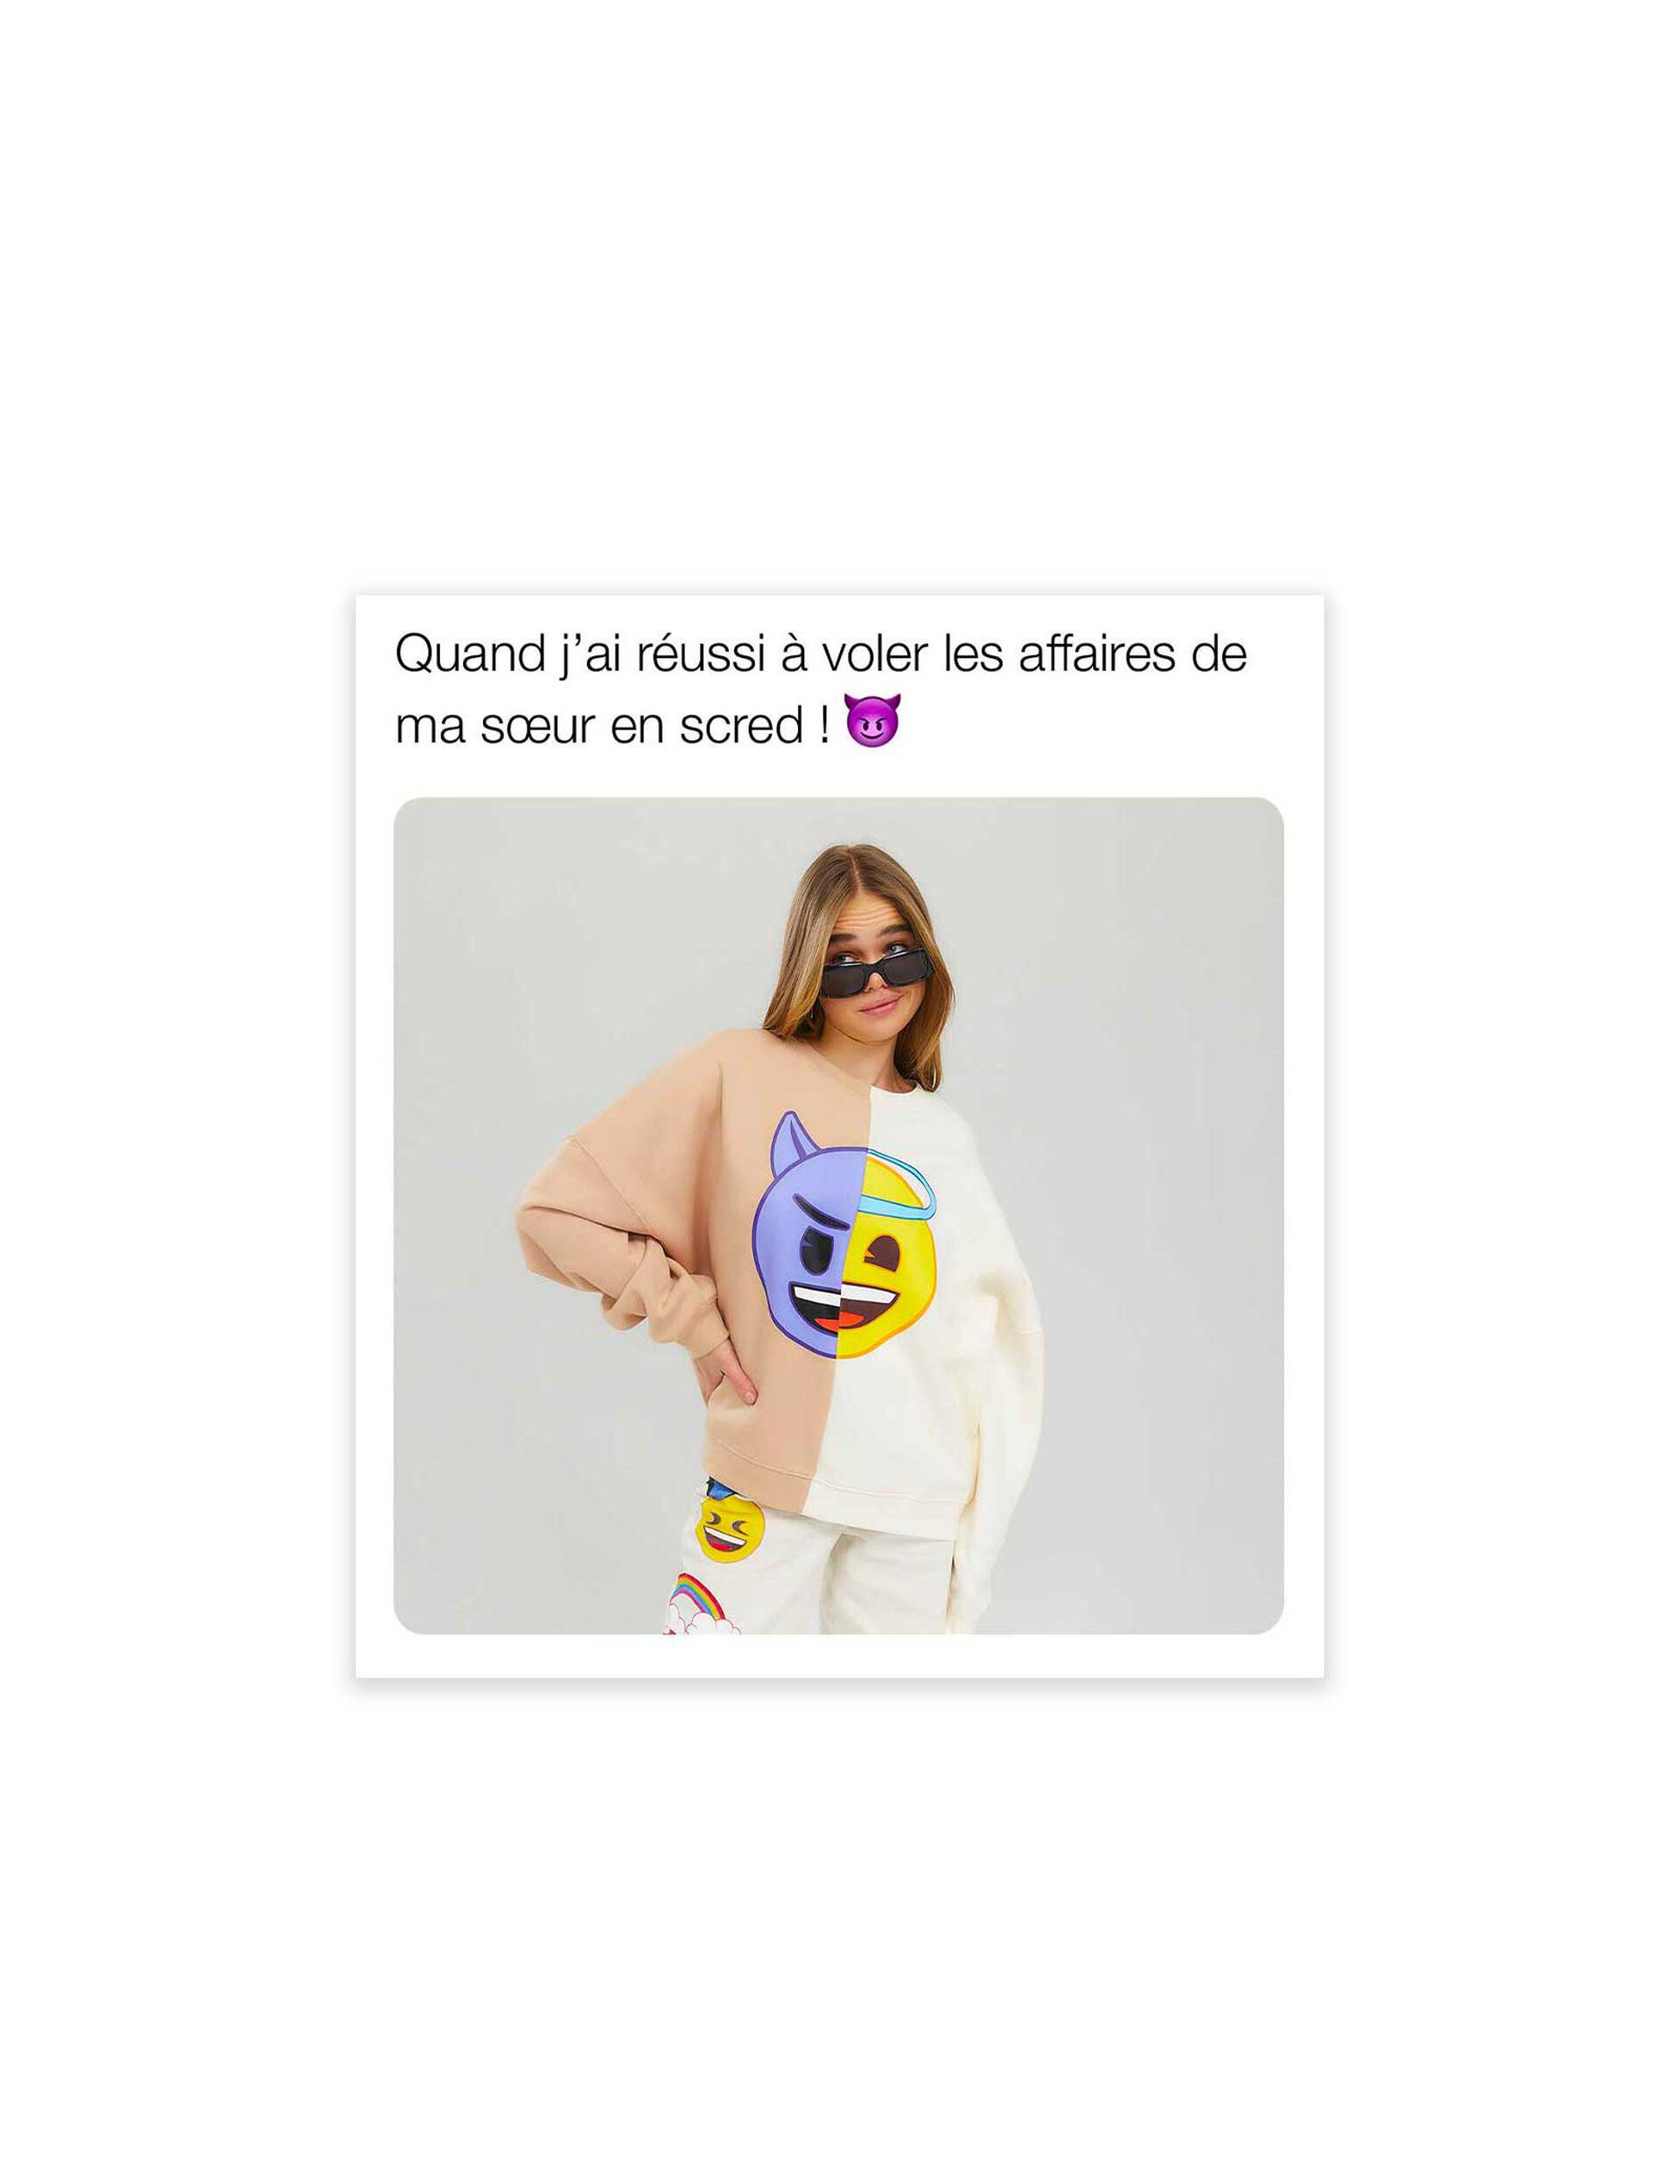 Emoji™ 2-tone sweatshirt